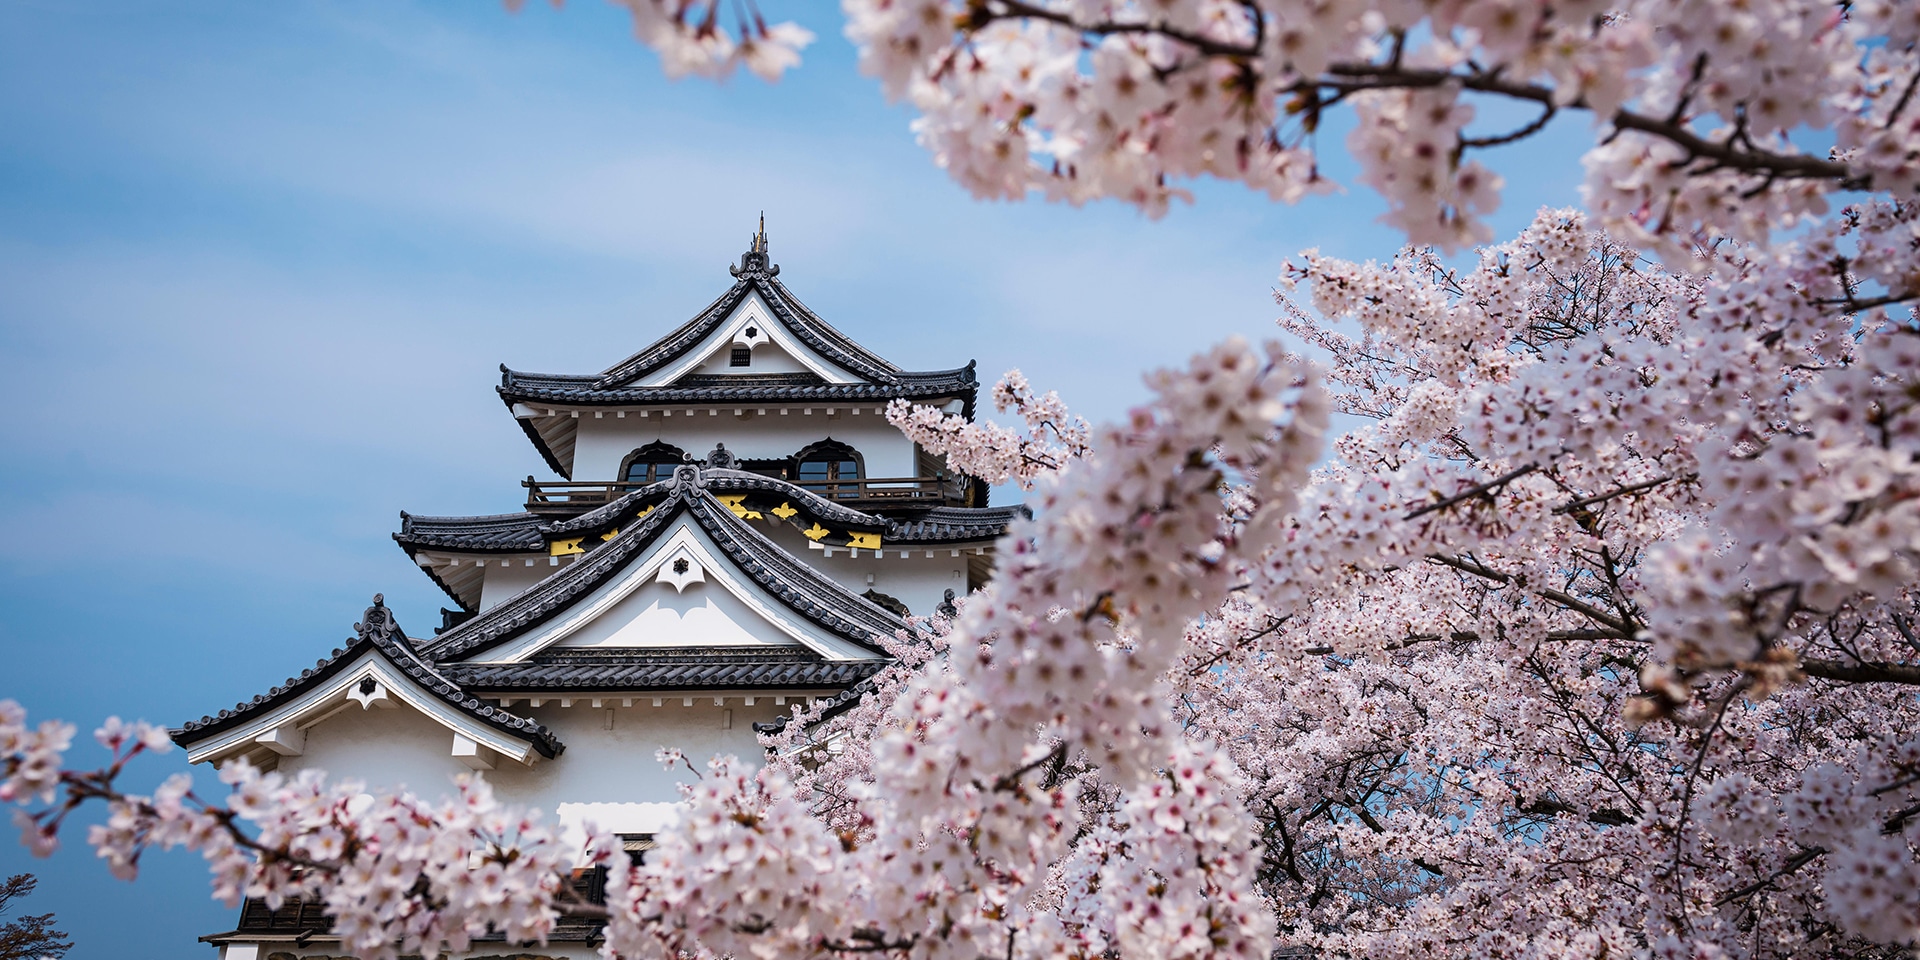 Japanese cherry blossoms.